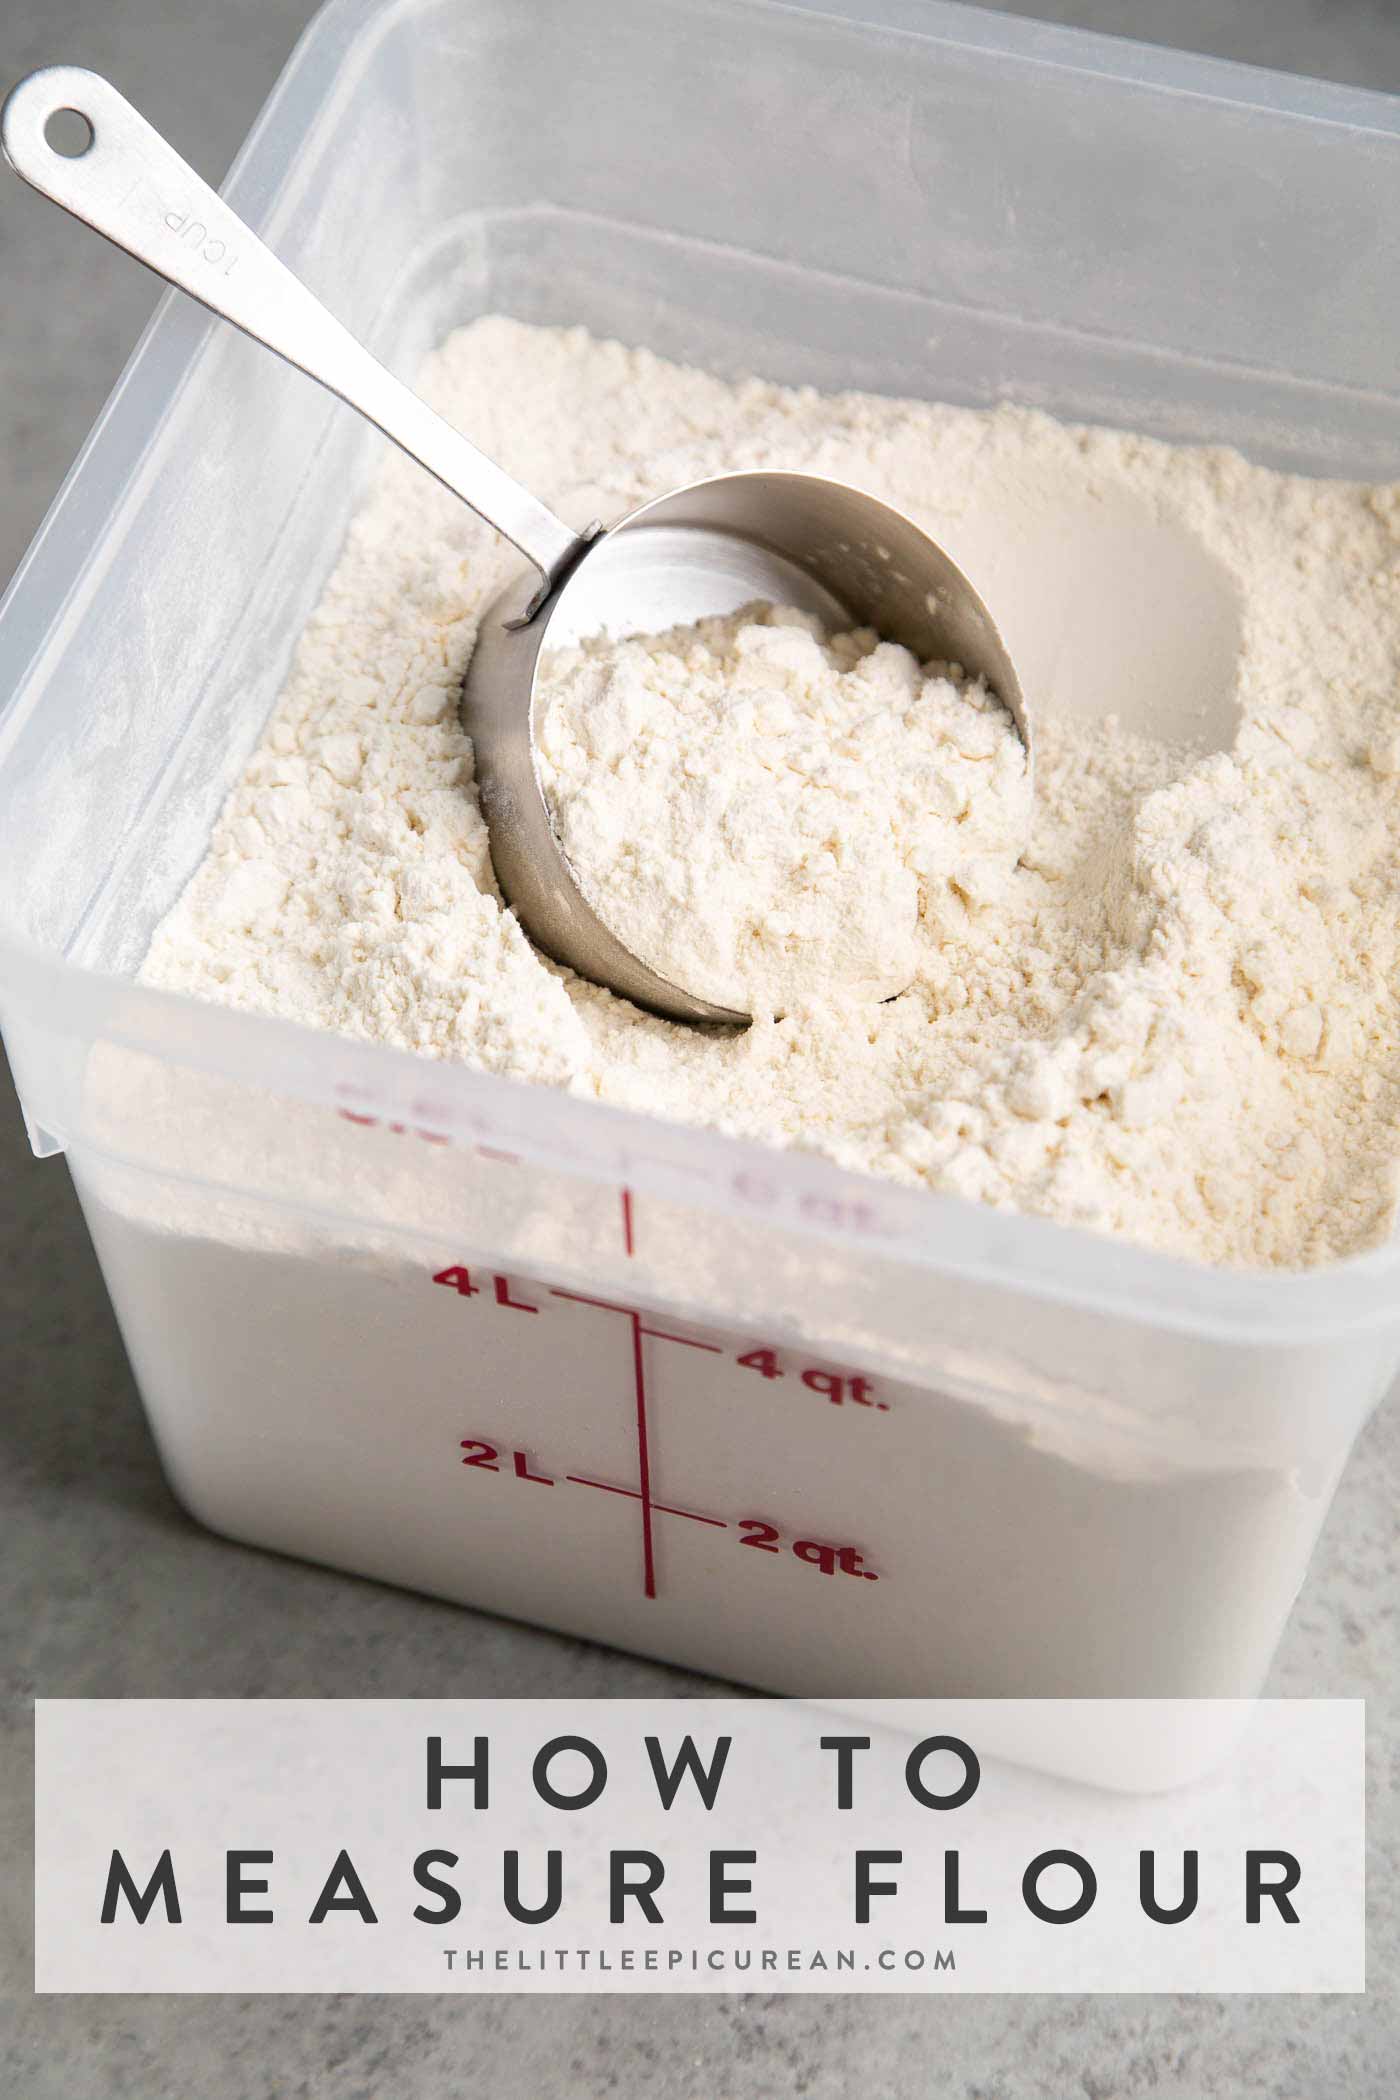 https://www.thelittleepicurean.com/wp-content/uploads/2020/07/how-to-measure-flour-properly-1.jpg